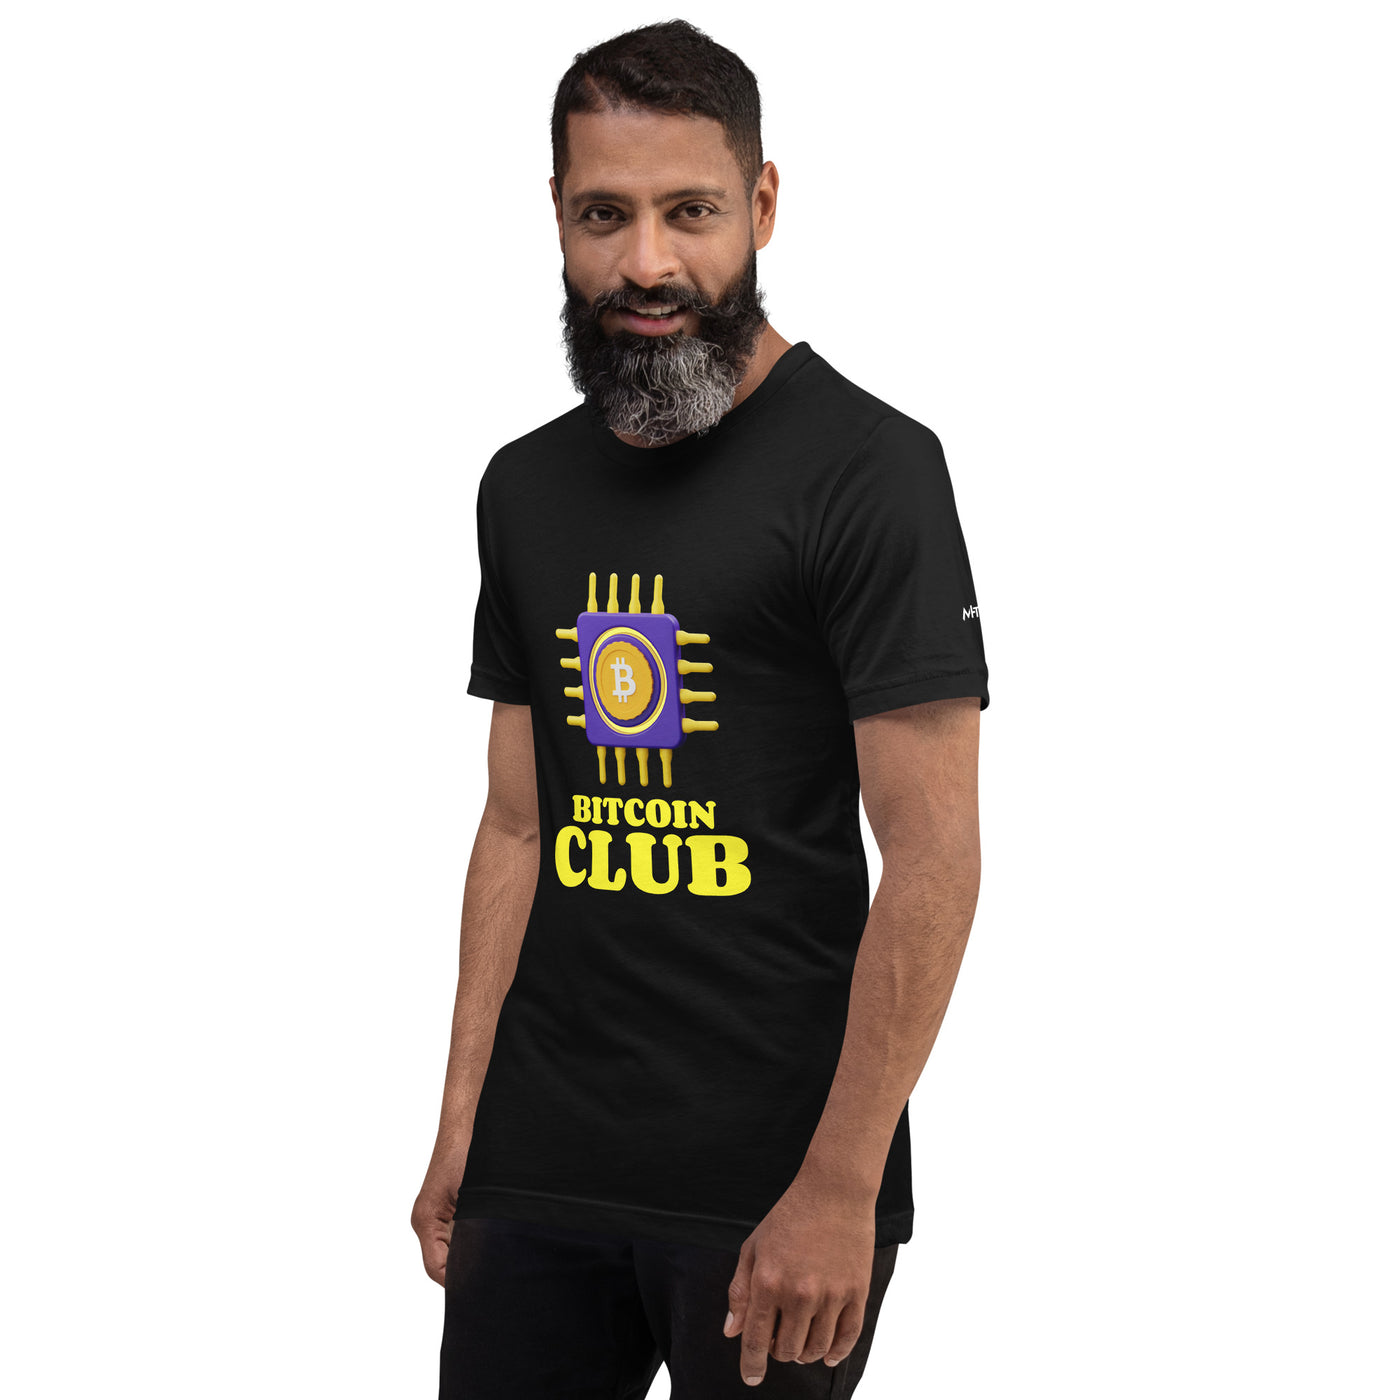 BITCOIN CLUB V2 - Unisex t-shirt